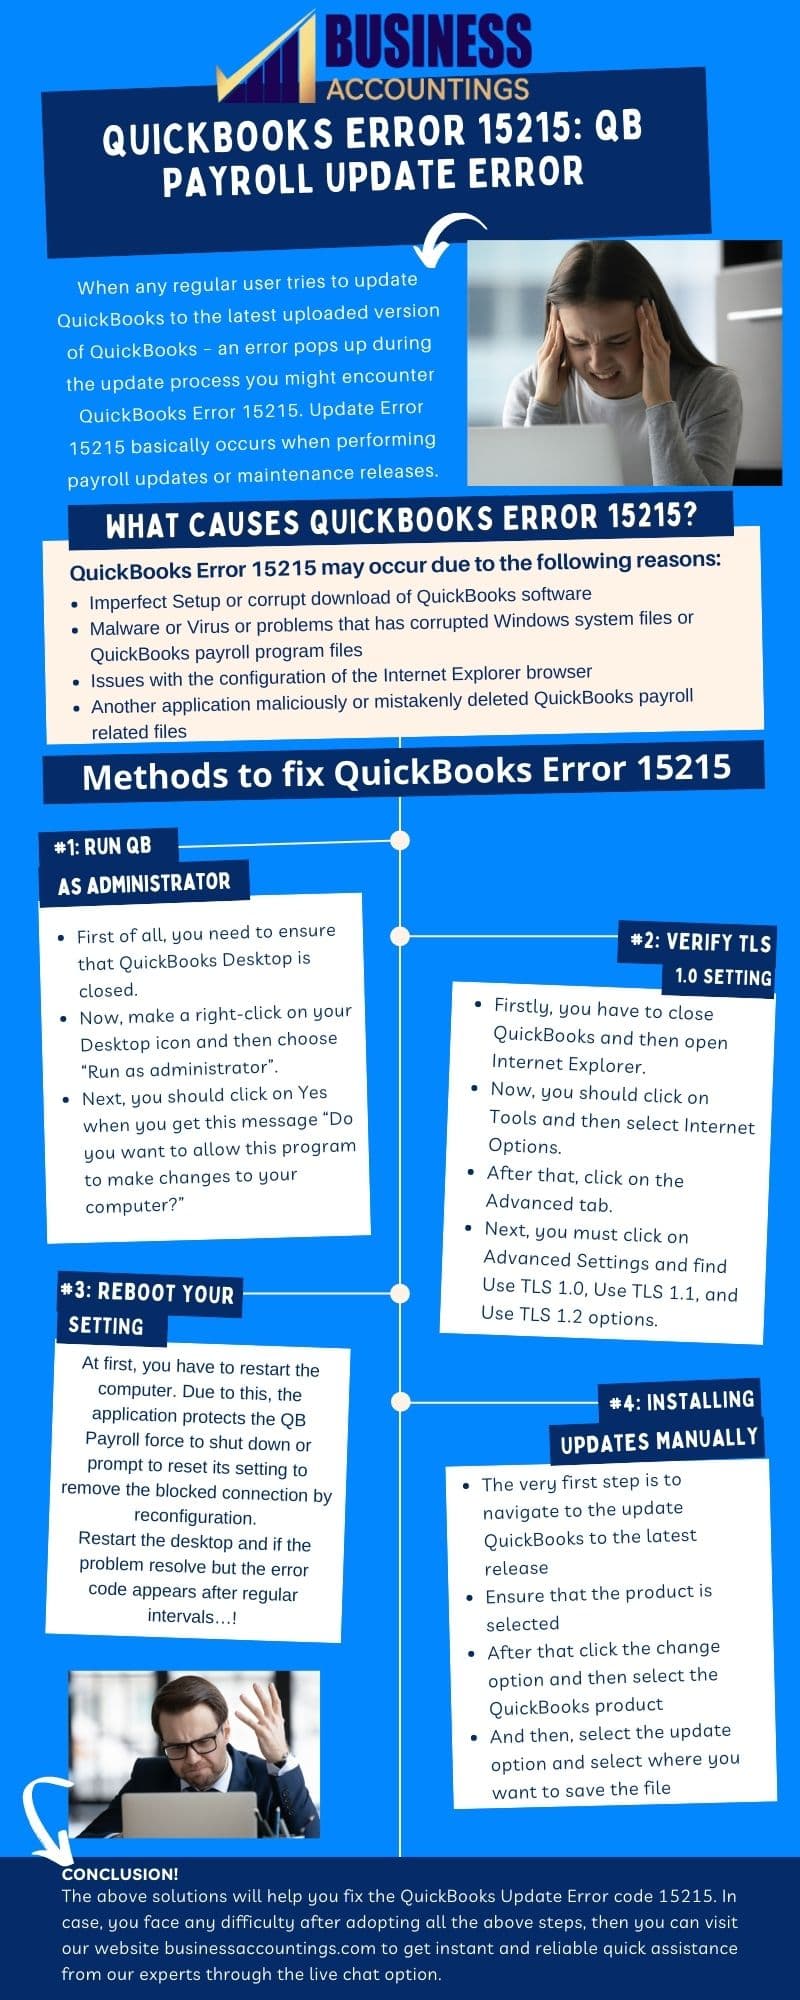 Infographic to Fix QuickBooks Error 15215